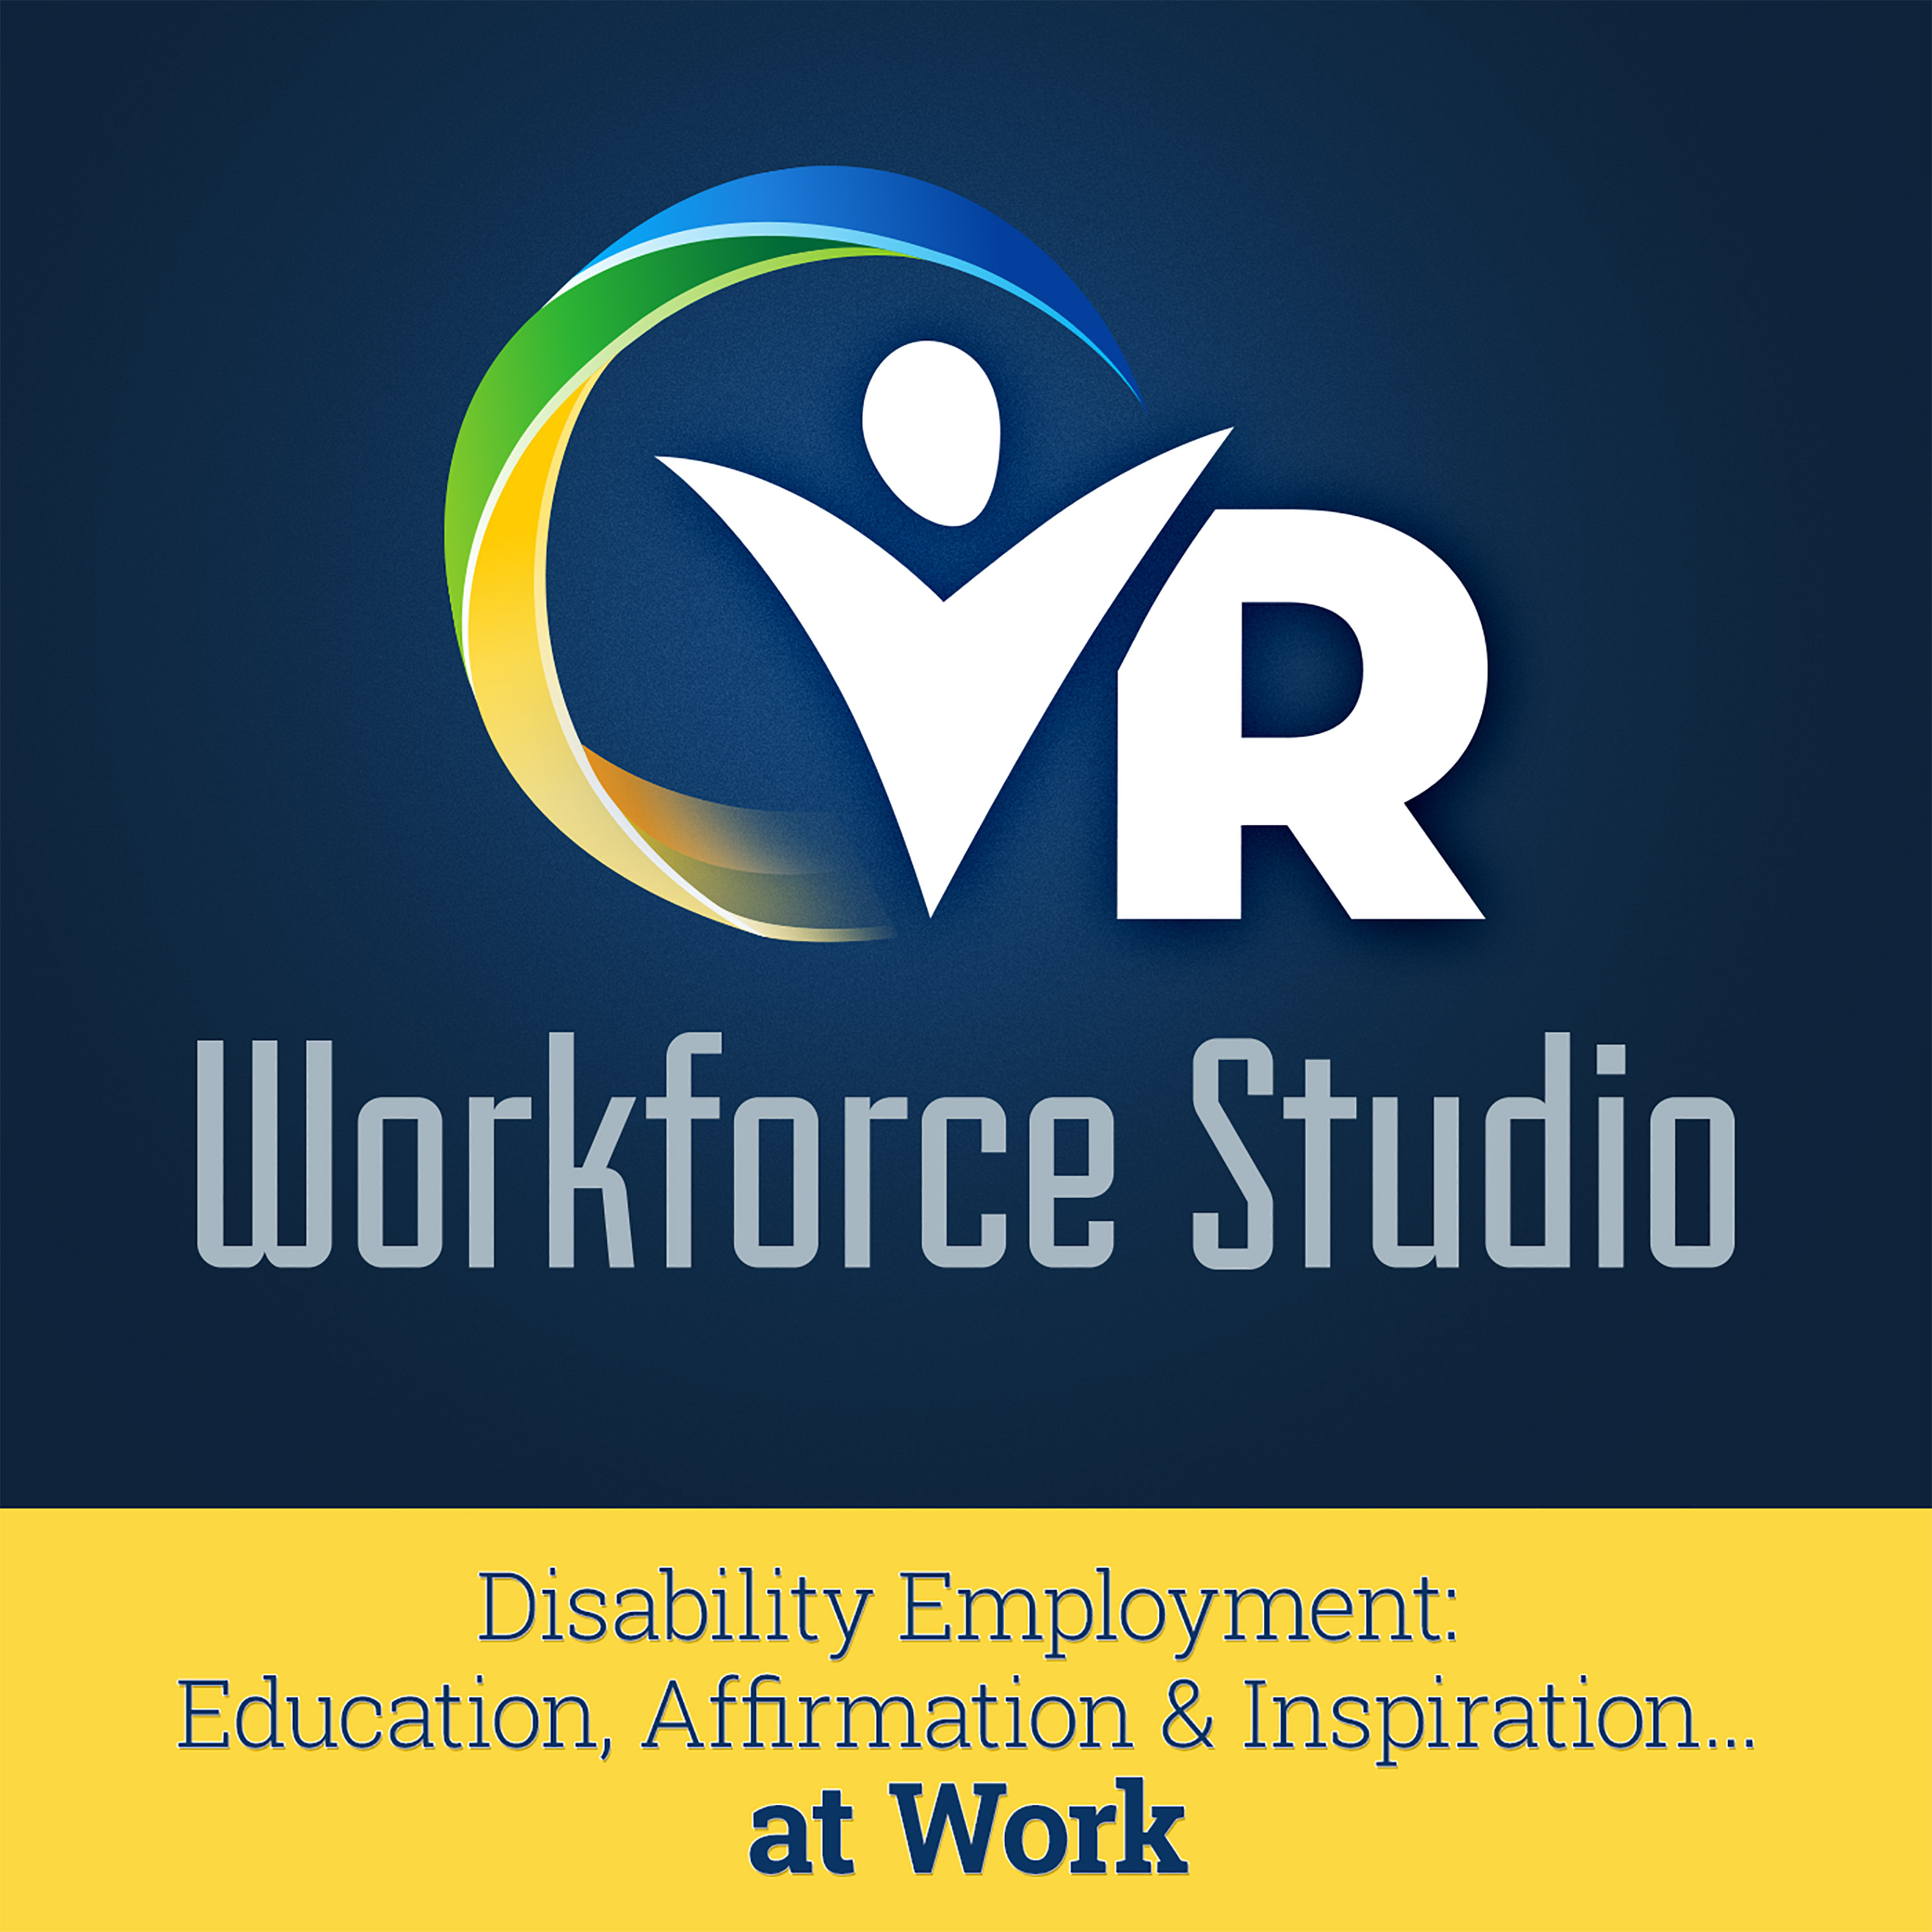 VR Workforce Studio